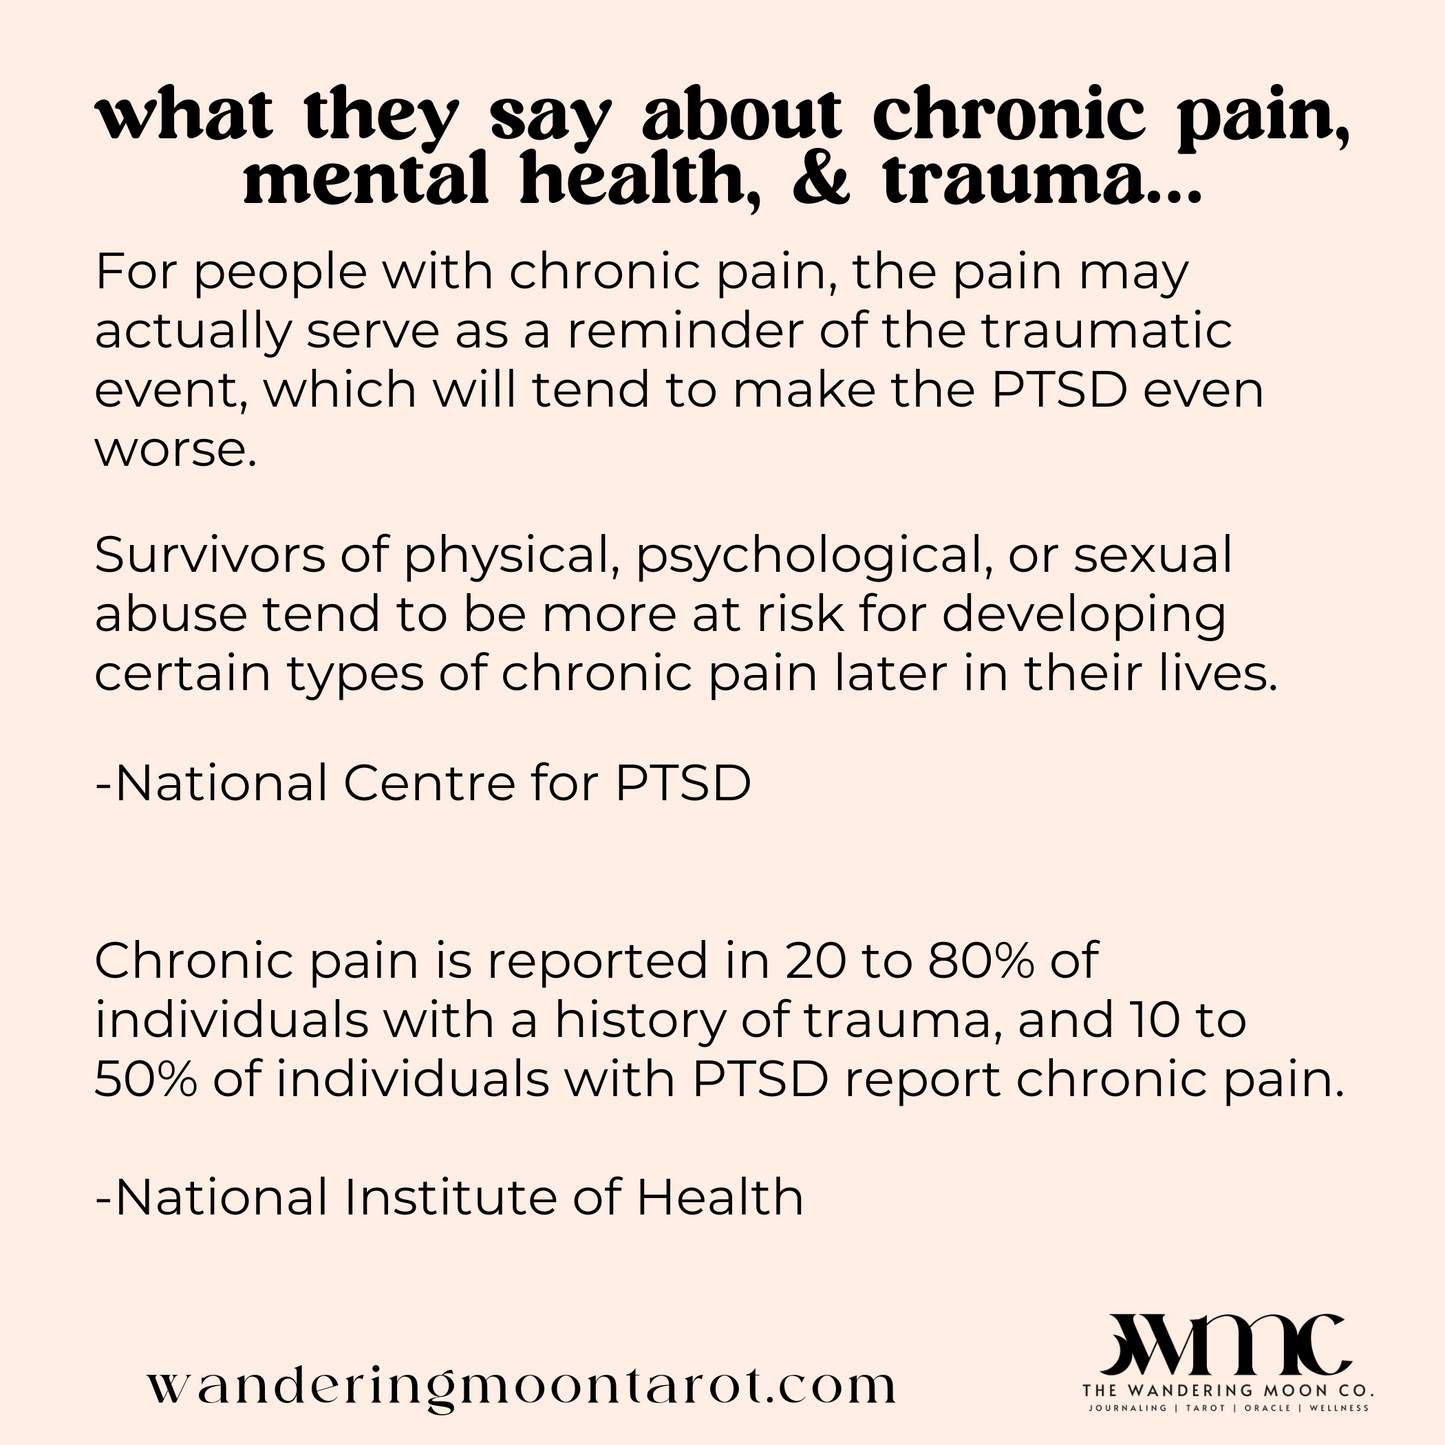 chronic pain/illness & mental health journal set, download